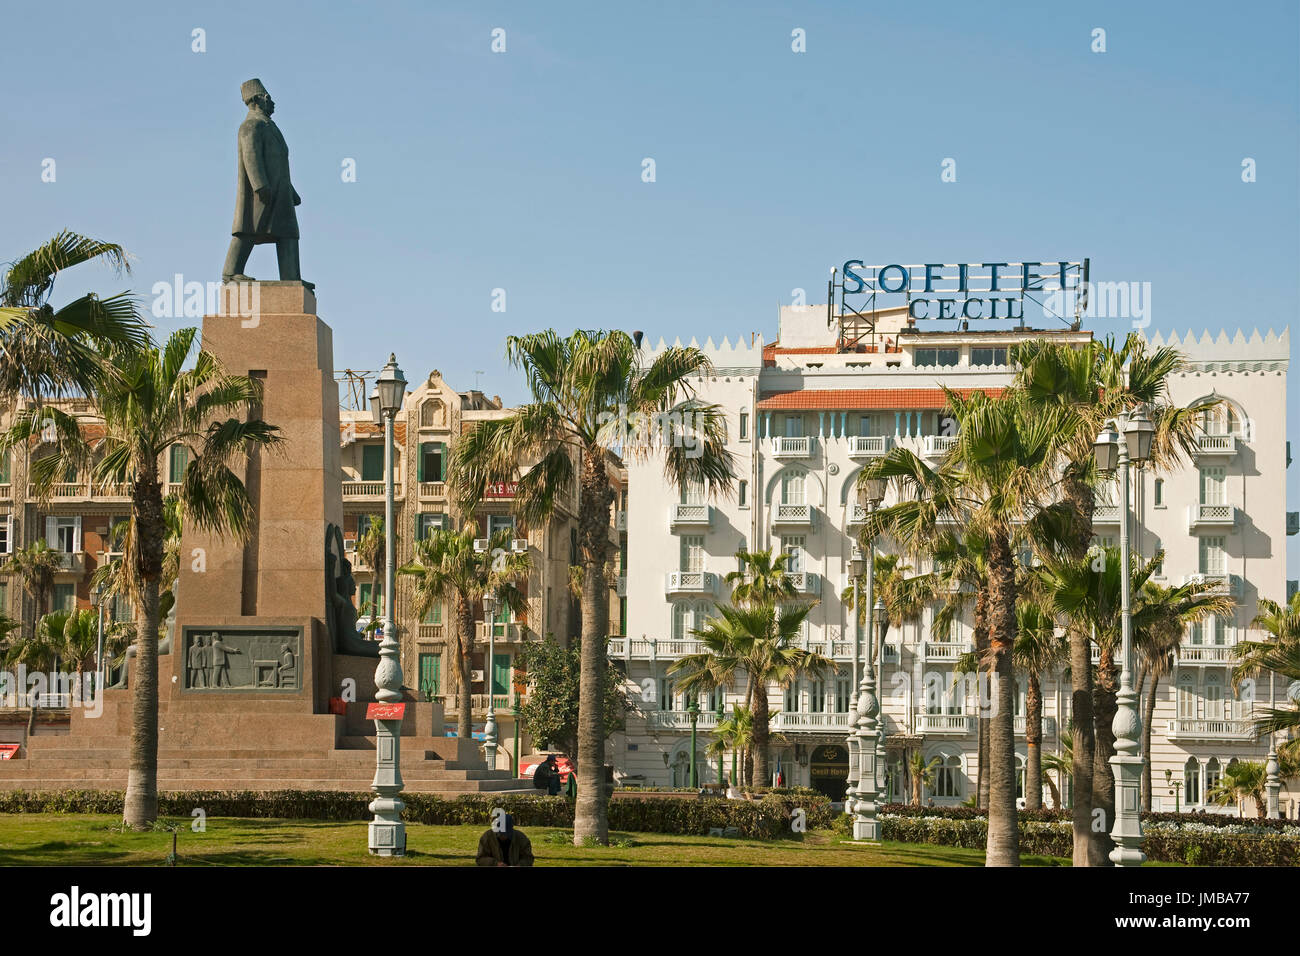 Aegypten ha, Alessandria, Saad Zaghloul Square, im Hintergrund das Hotel Sofitel Cecil Foto Stock